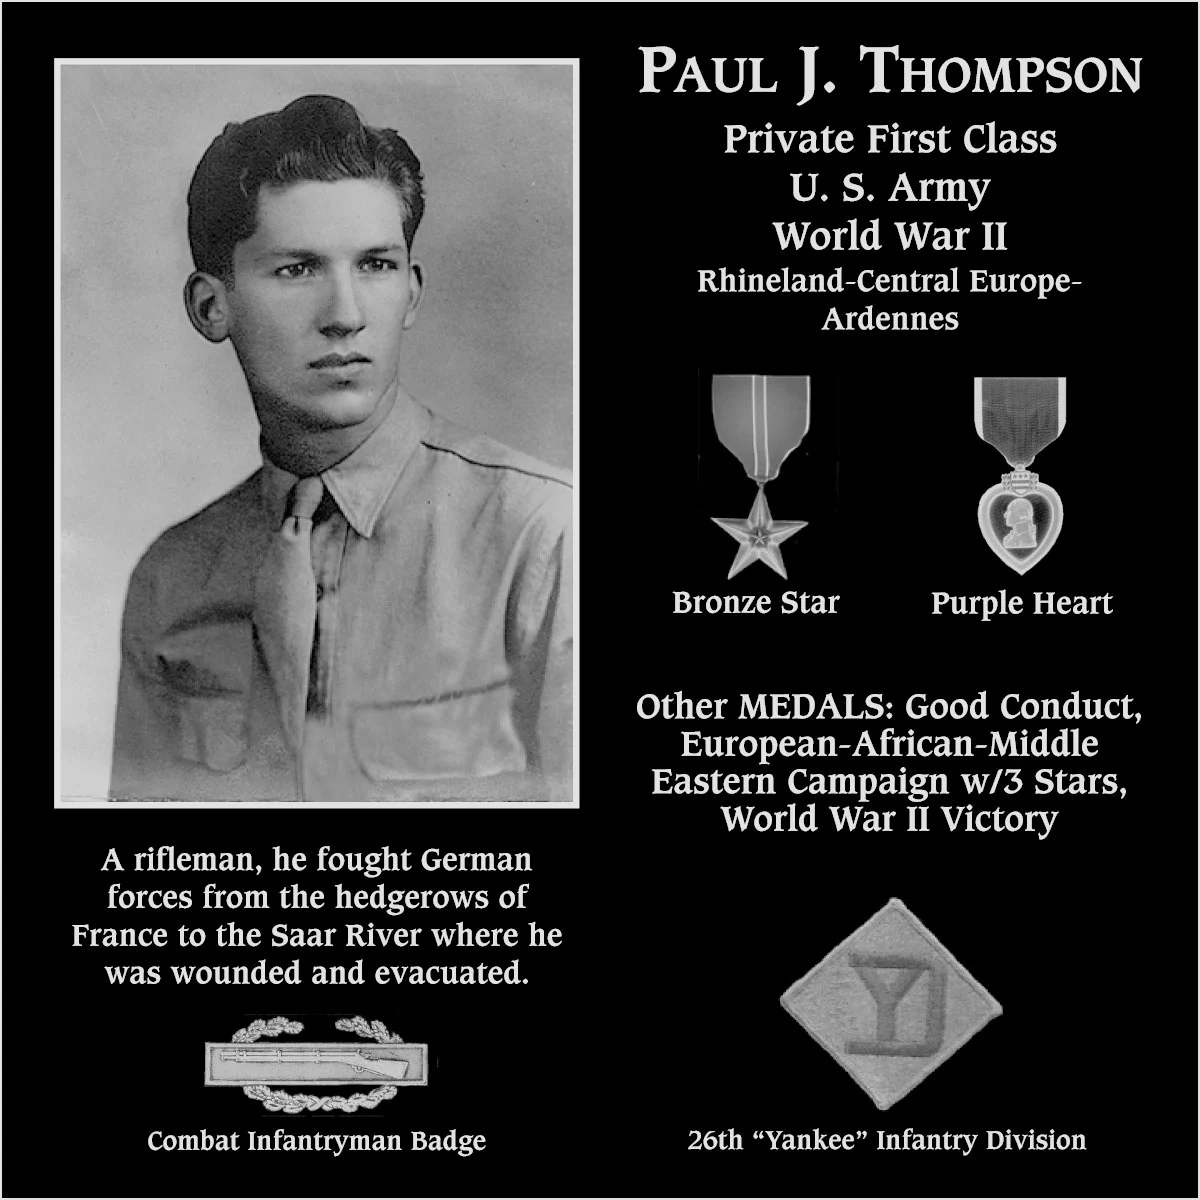 Paul J Thompson